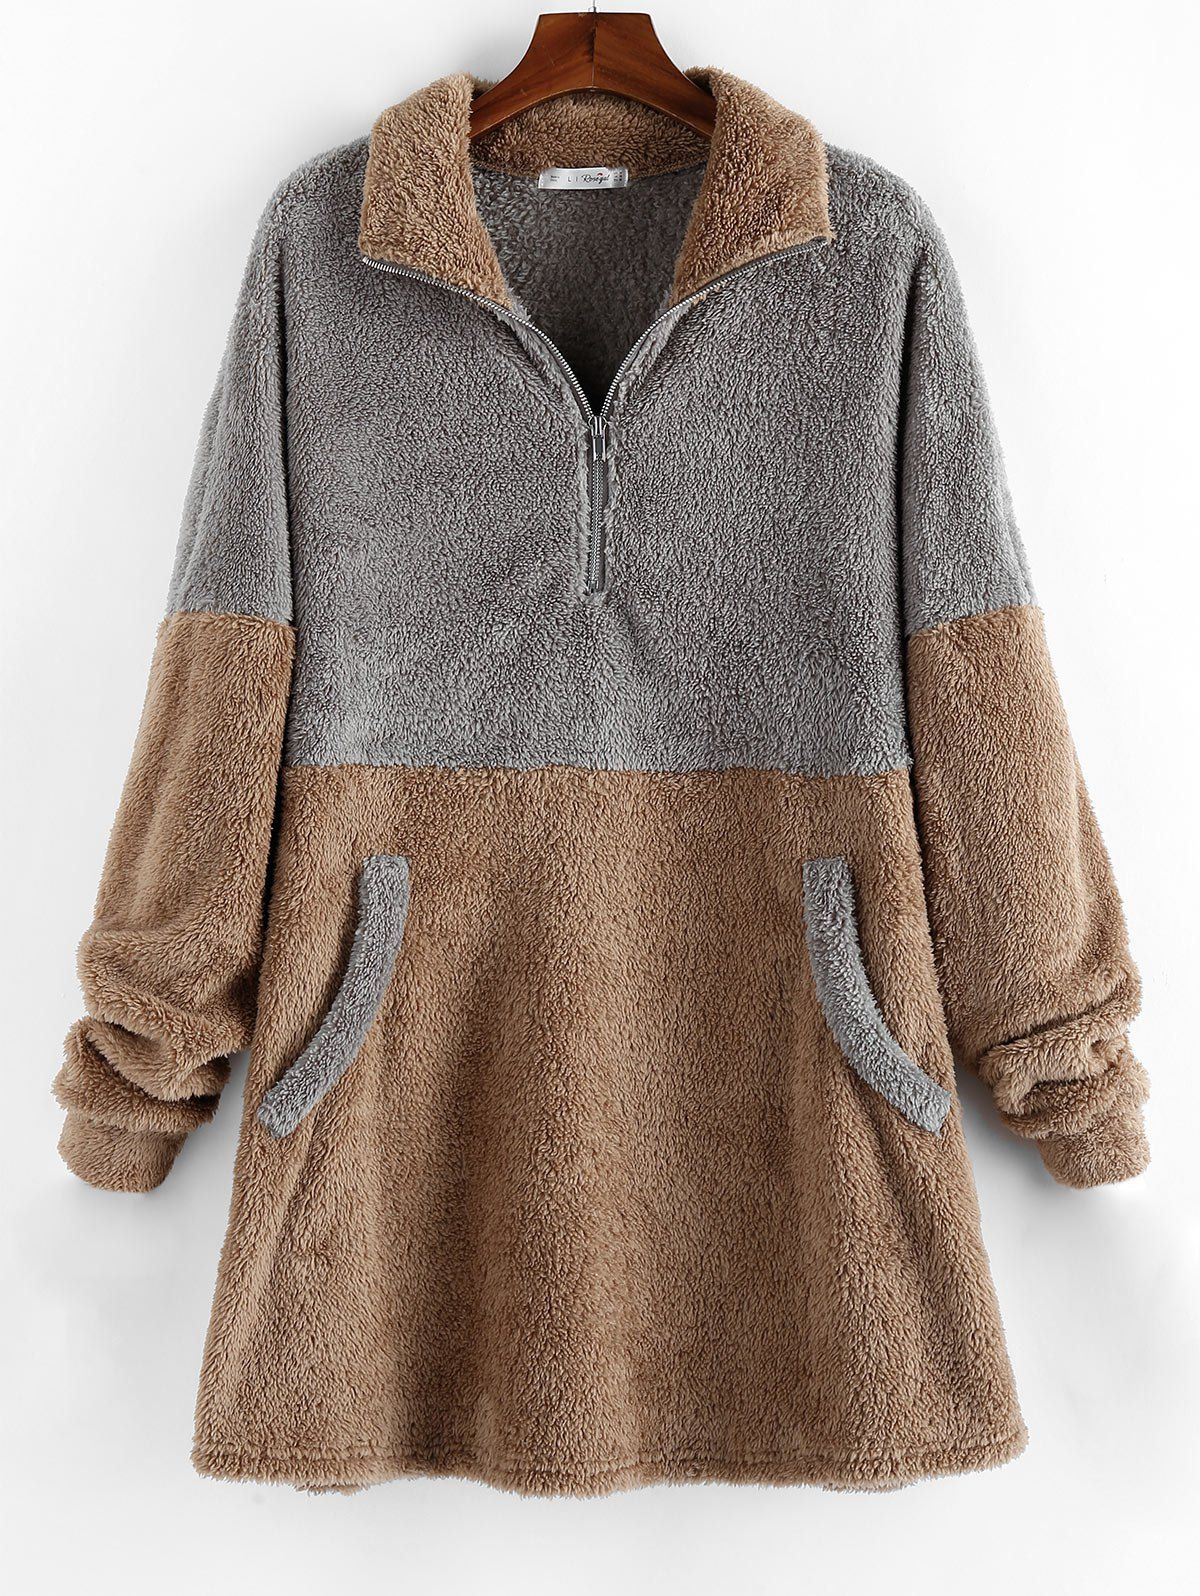 Plus Size Colorblock Faux Fur Sweatshirt - DARK GOLDENROD L